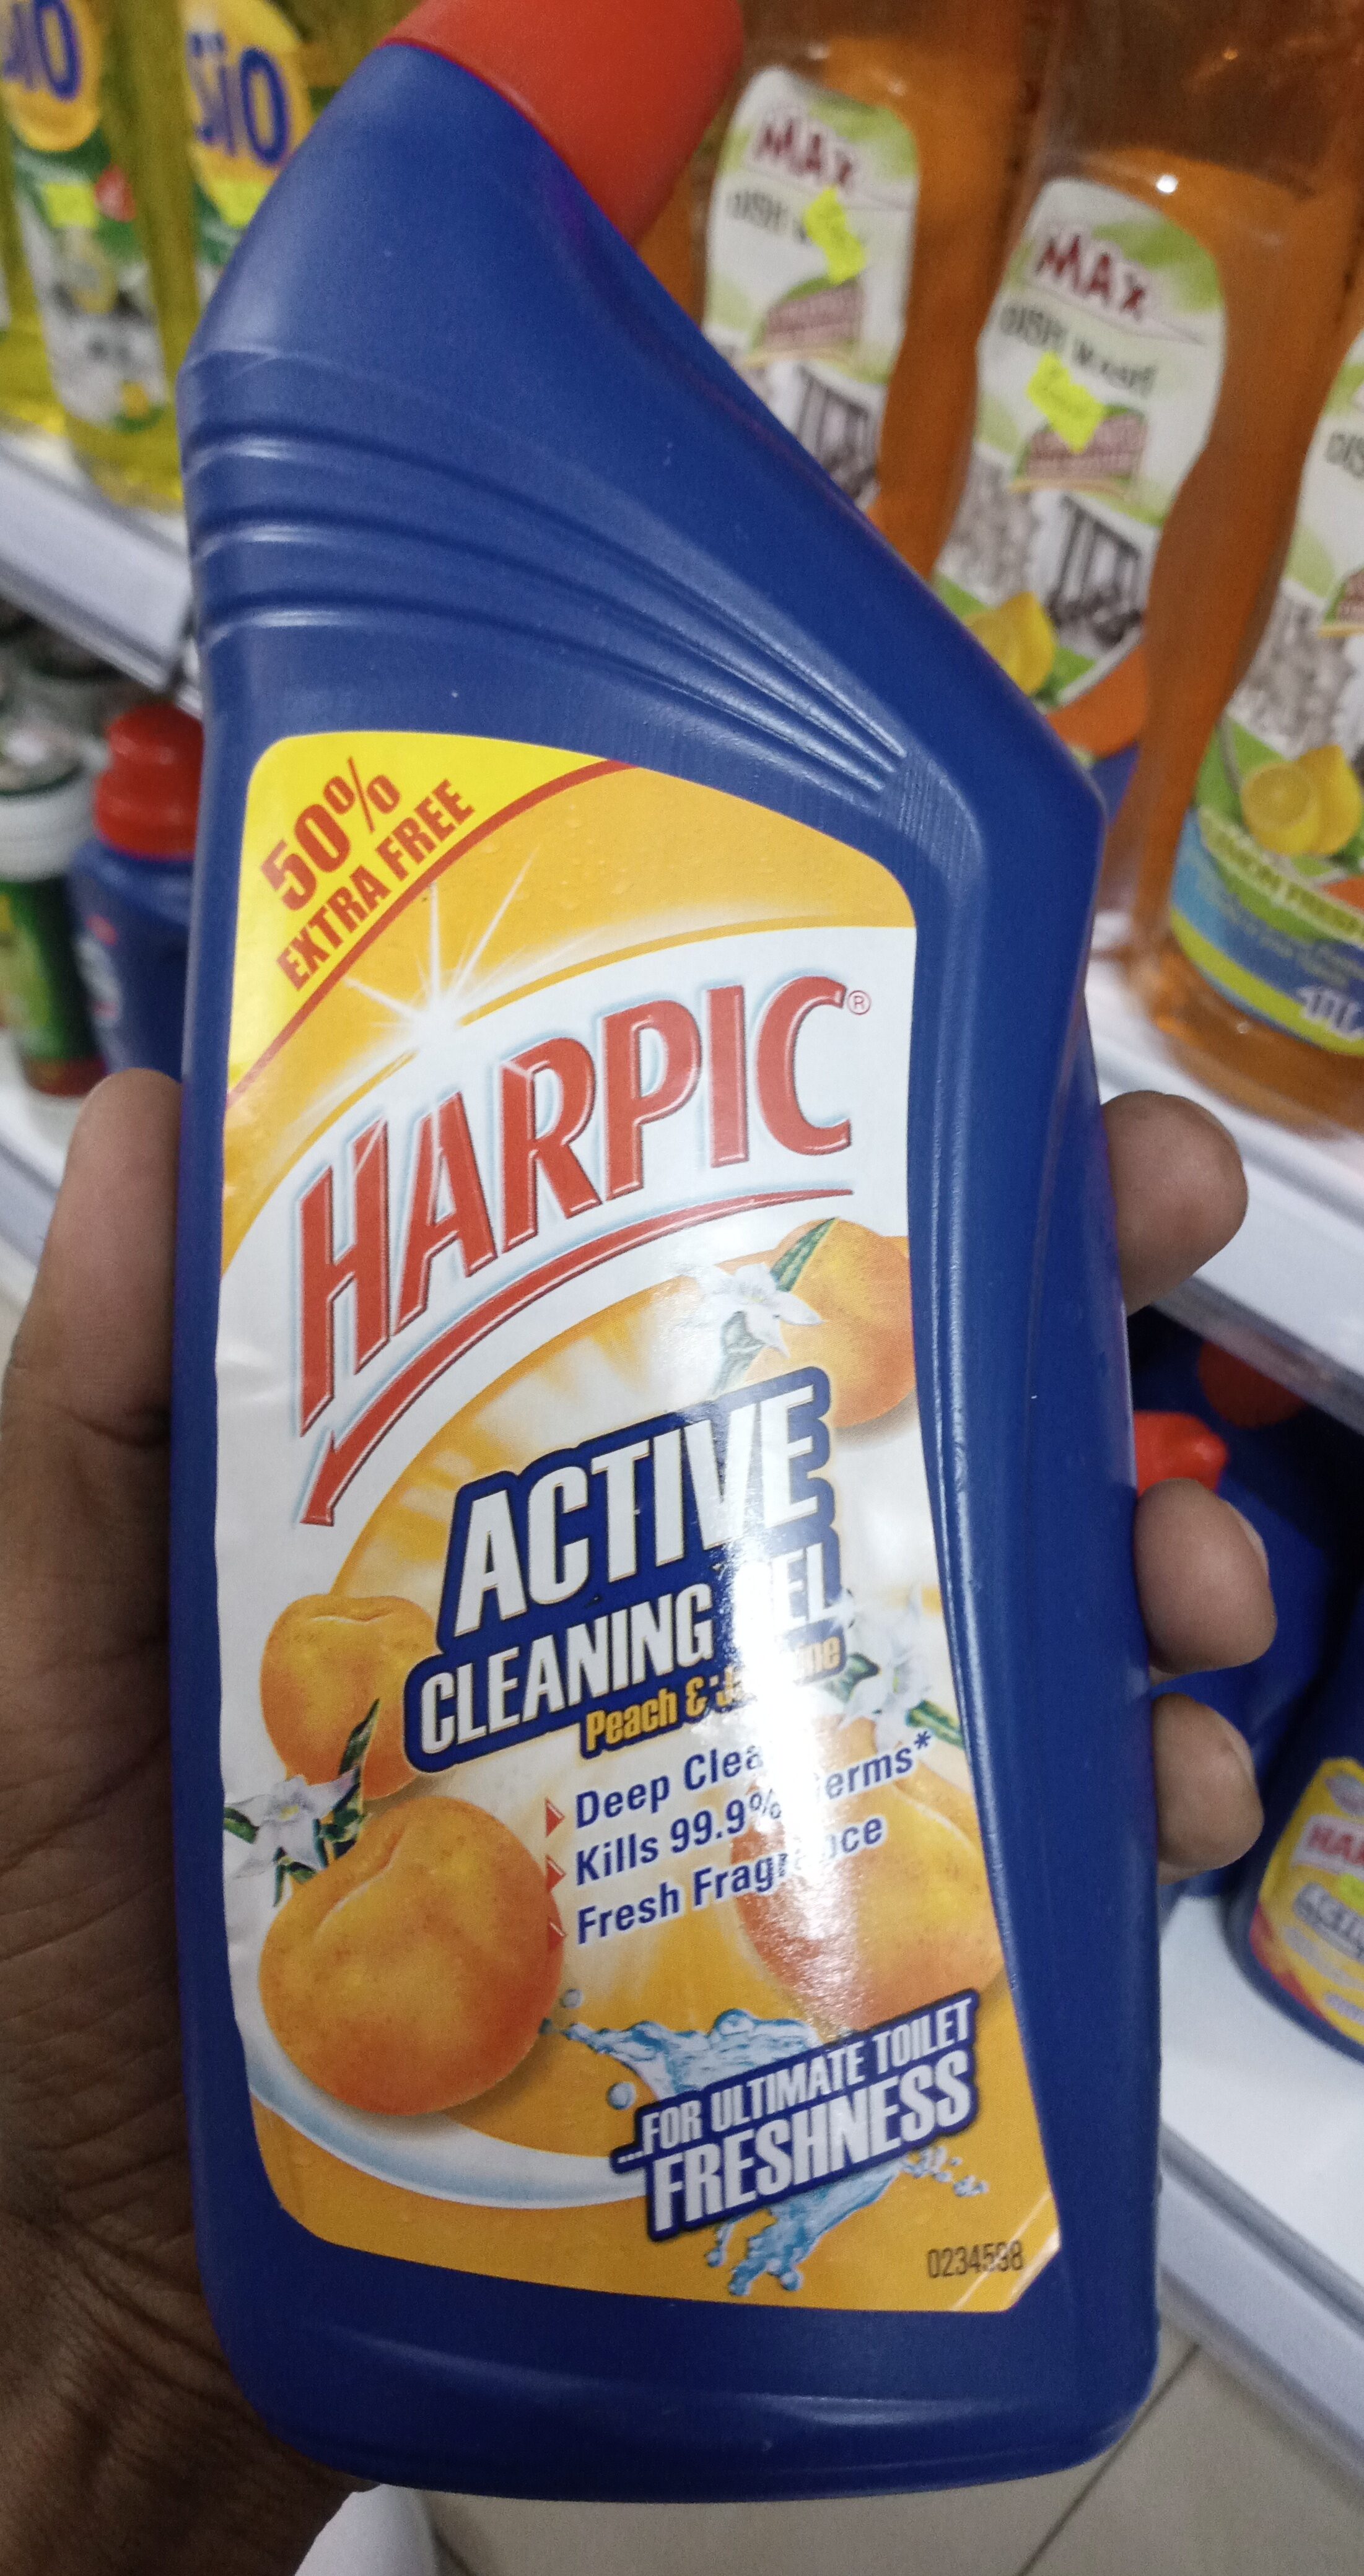 HARPIC ACTIVE CLEANING GEL PEACH&JASMINE - Product - en